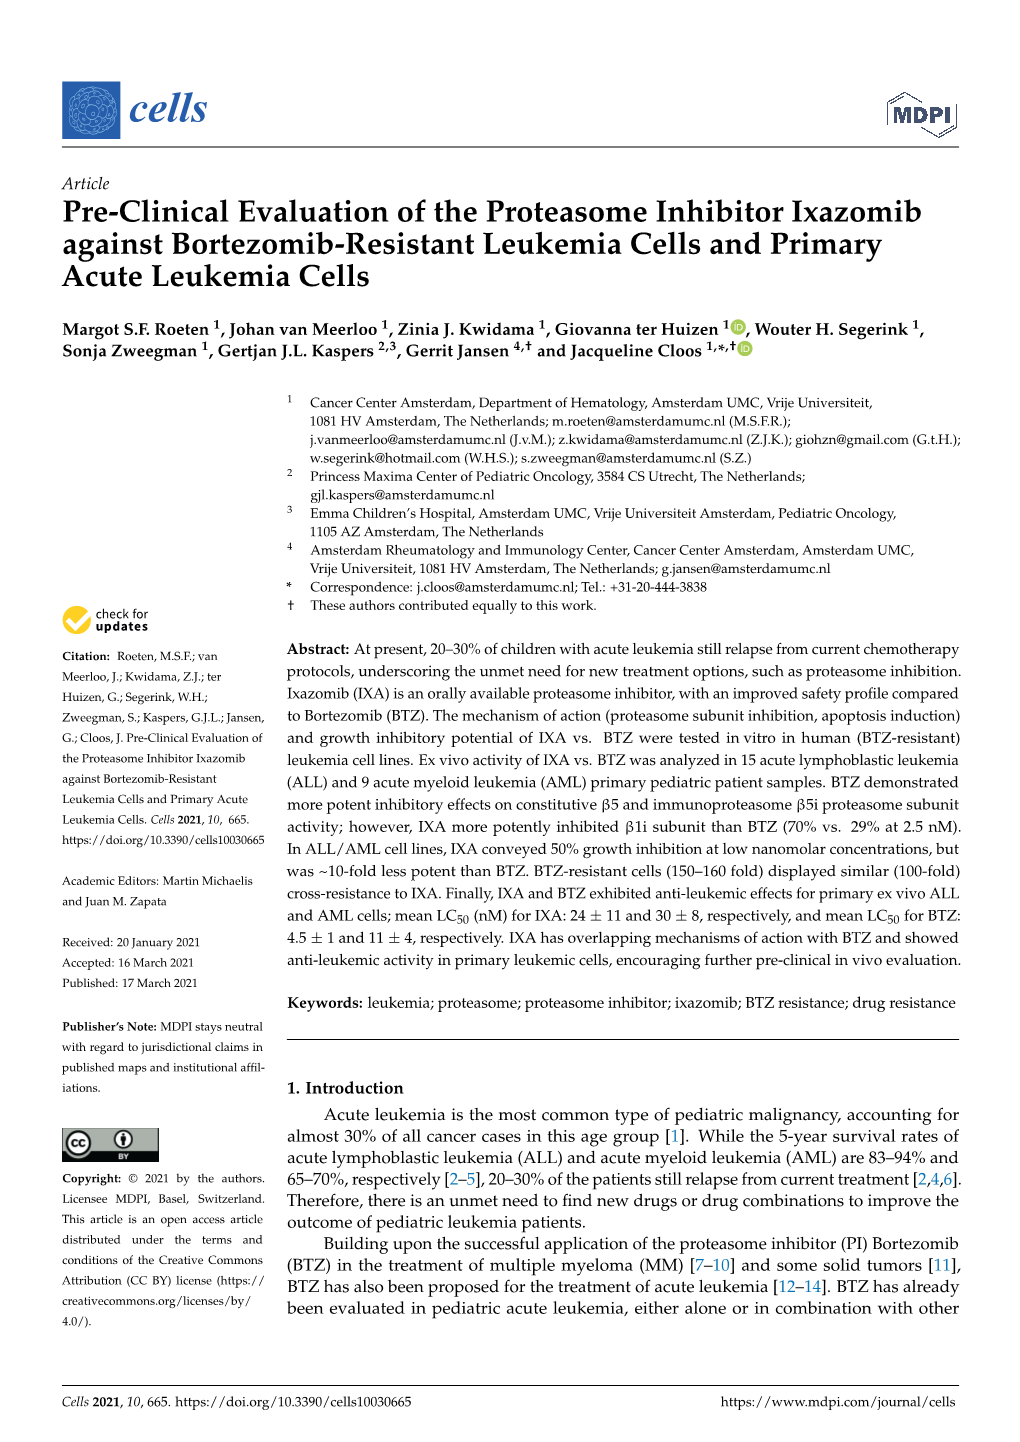 Pre-Clinical Evaluation of the Proteasome Inhibitor Ixazomib Against Bortezomib-Resistant Leukemia Cells and Primary Acute Leukemia Cells